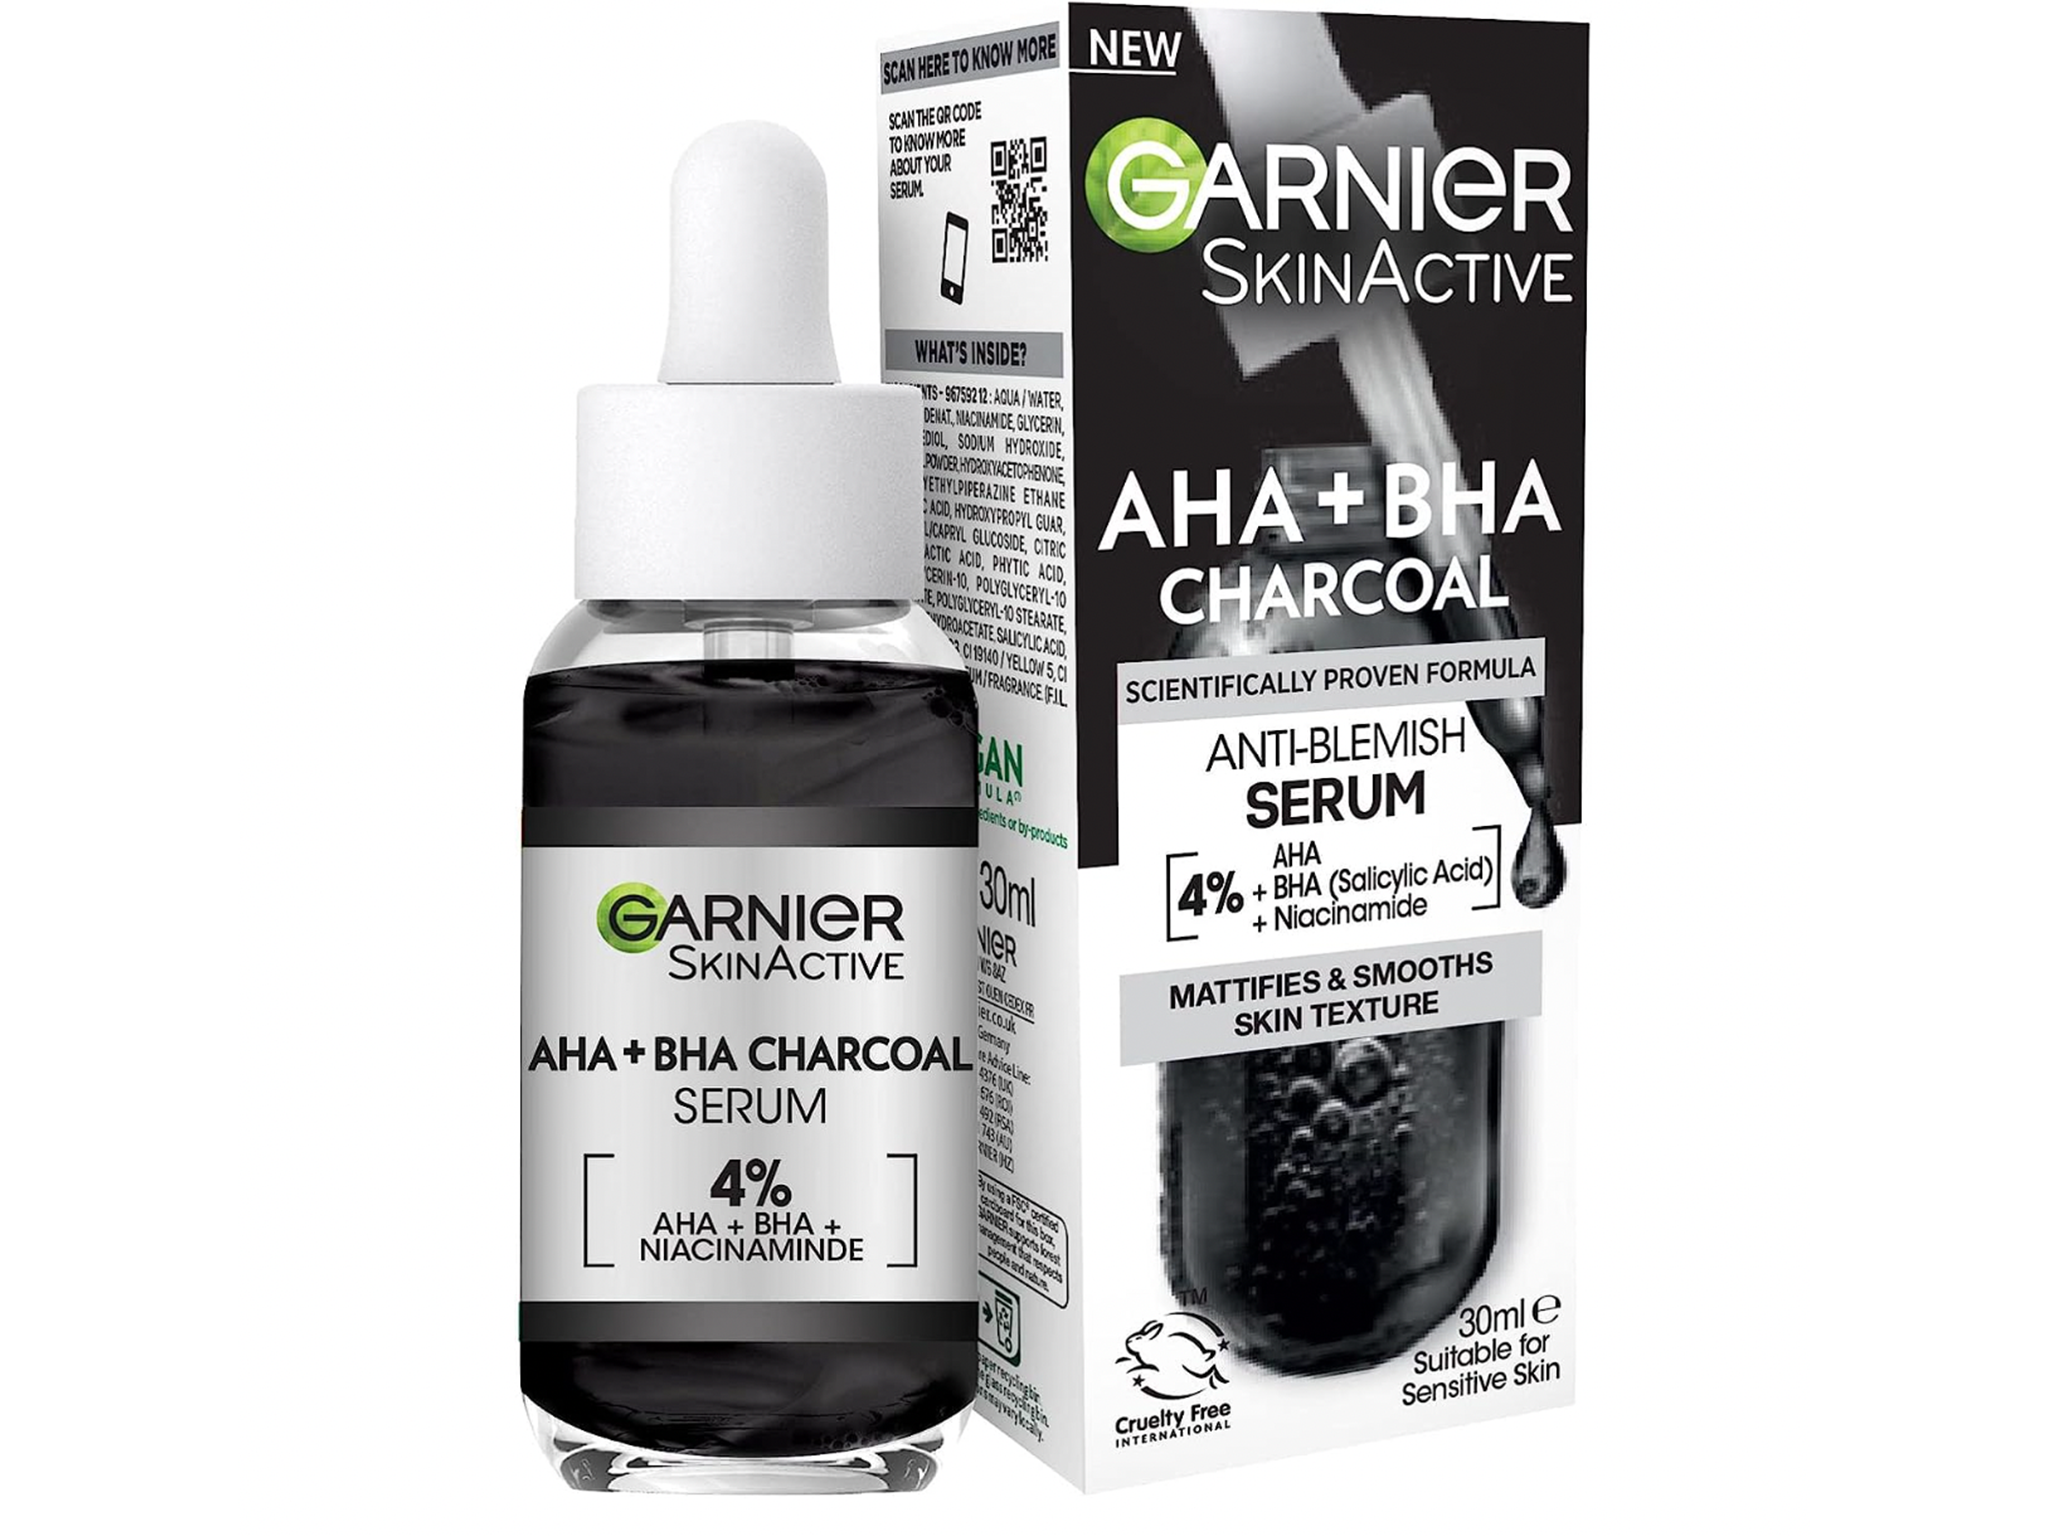 Bargain beauty brands Garnier skinactive 4% AHA + BHA charcoal serum